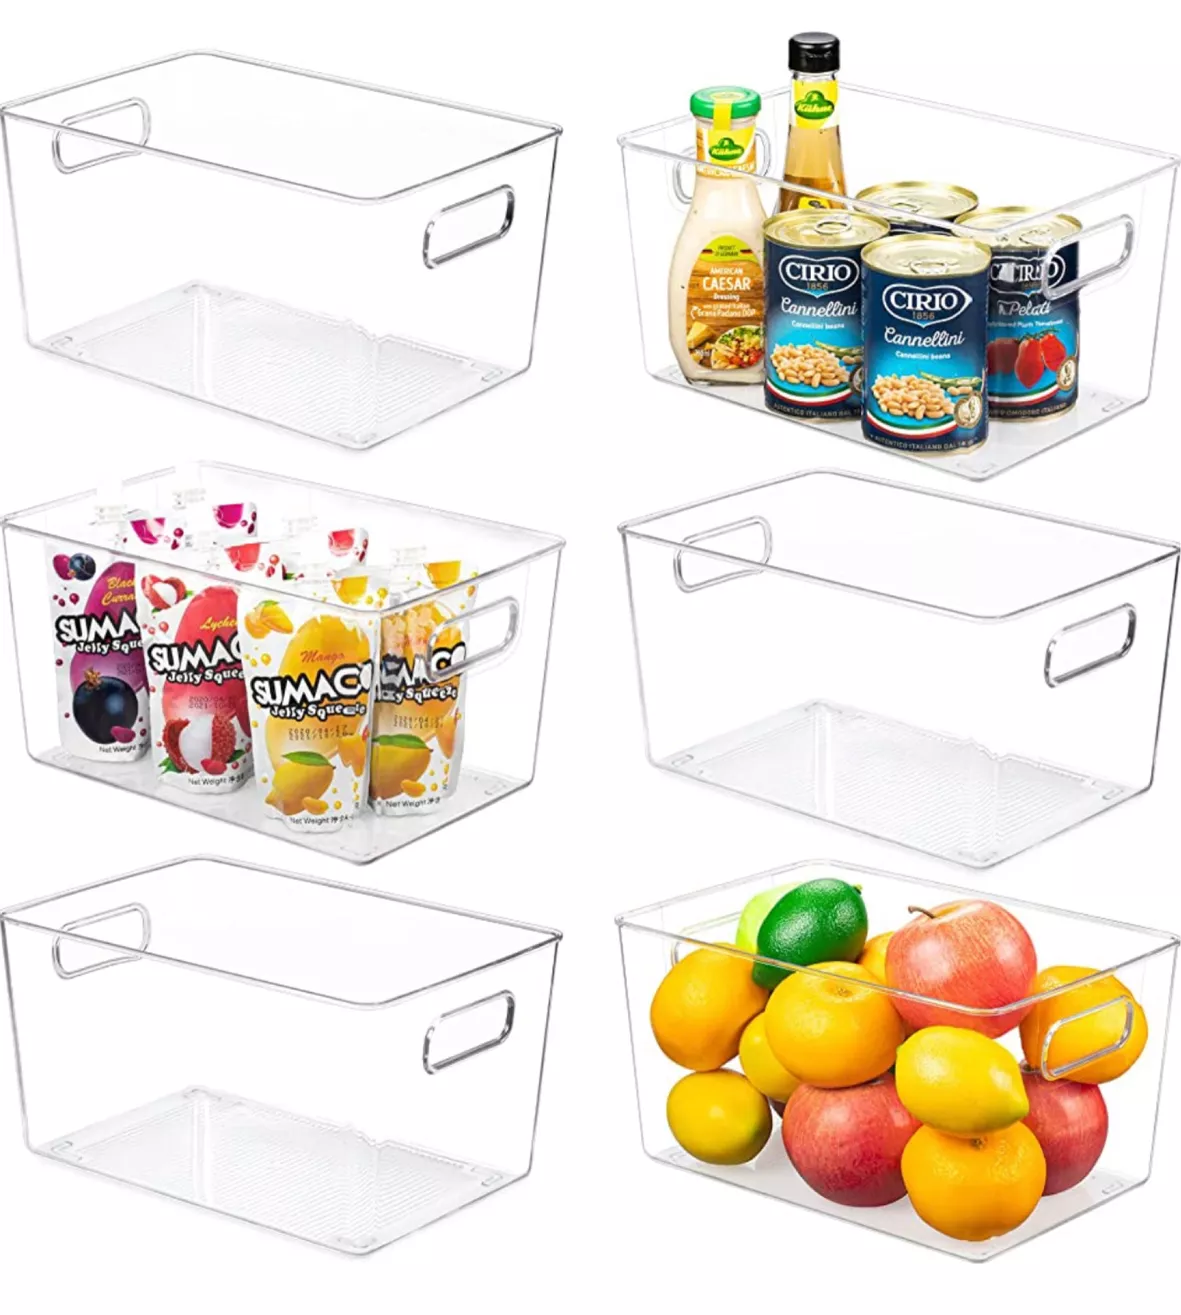 Fullstar Fridge Organisers Bins [Set of 4] Fridge Storage Containers - Clear Fridge Storage Containers with Handles Kitchen Pantry Organizers and